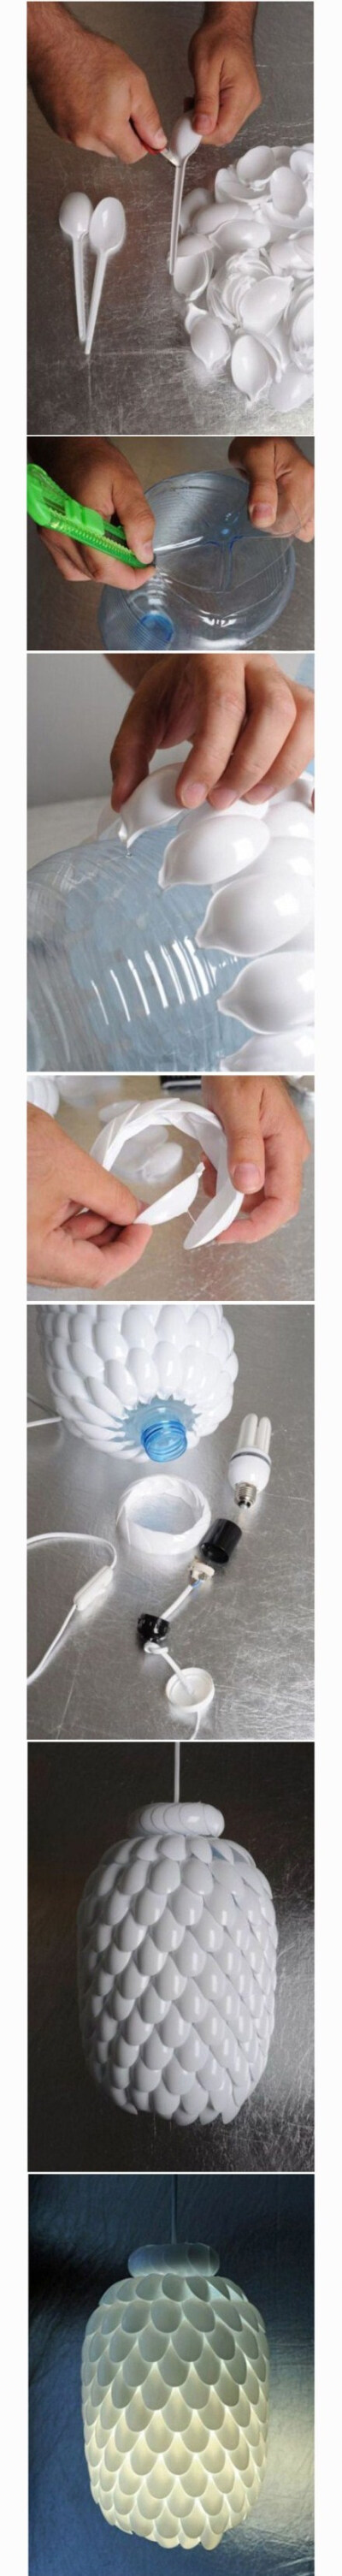 【DIY一个漂亮的吊灯~】用1堆白色塑料勺子+1个大号矿泉水瓶+白炽灯泡+带线开关等材料制作的吊灯，造型看上去还不错~